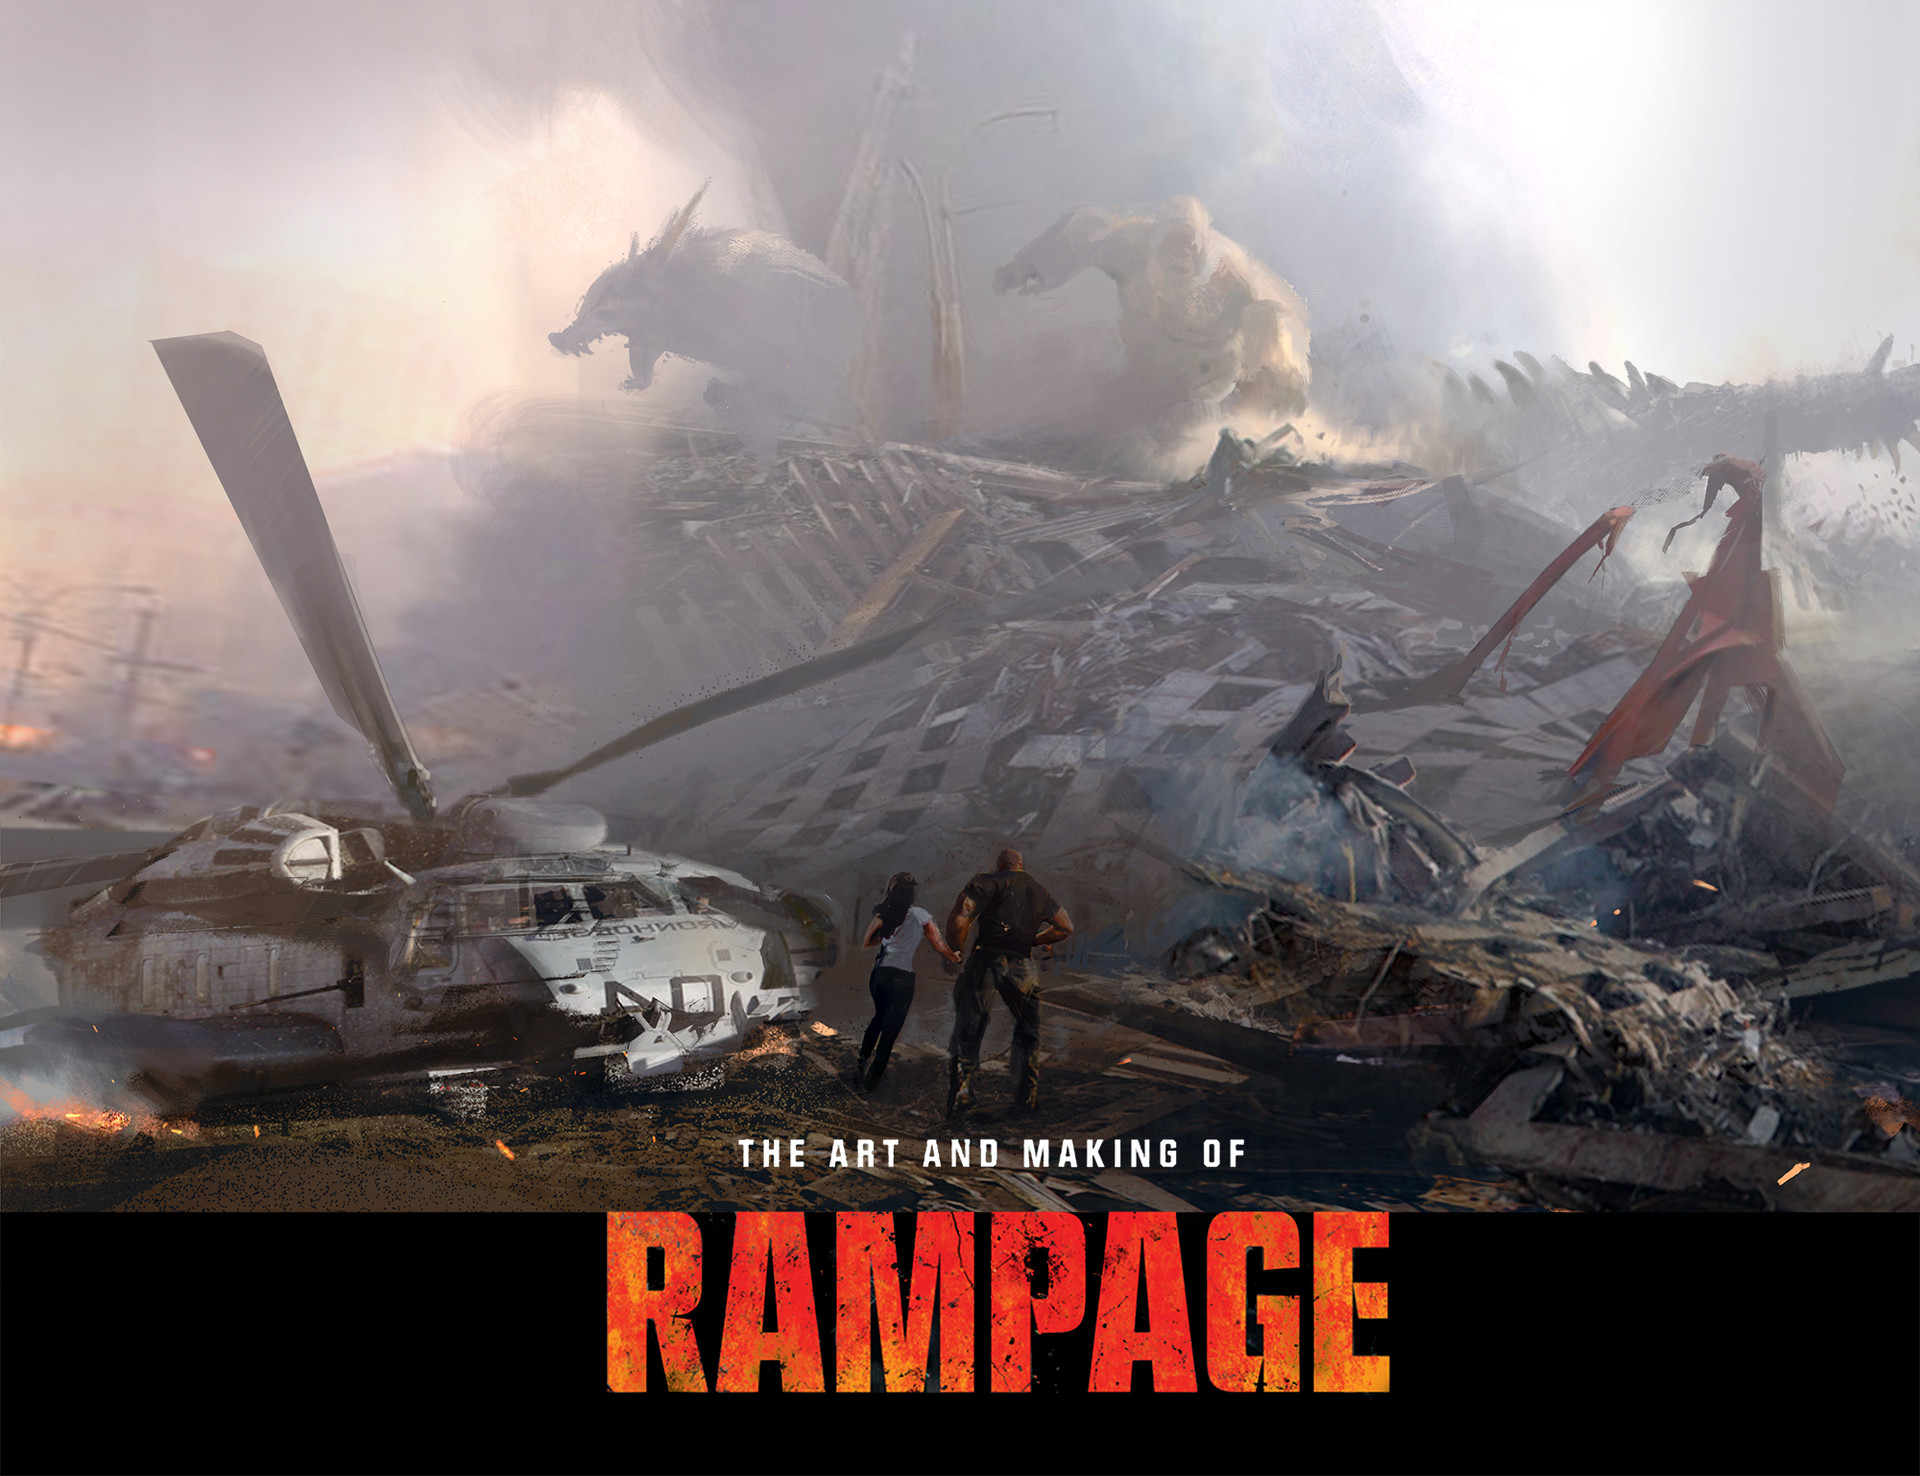  Rampage  Movie Artwork HD Movies 4k Wallpapers  Images 